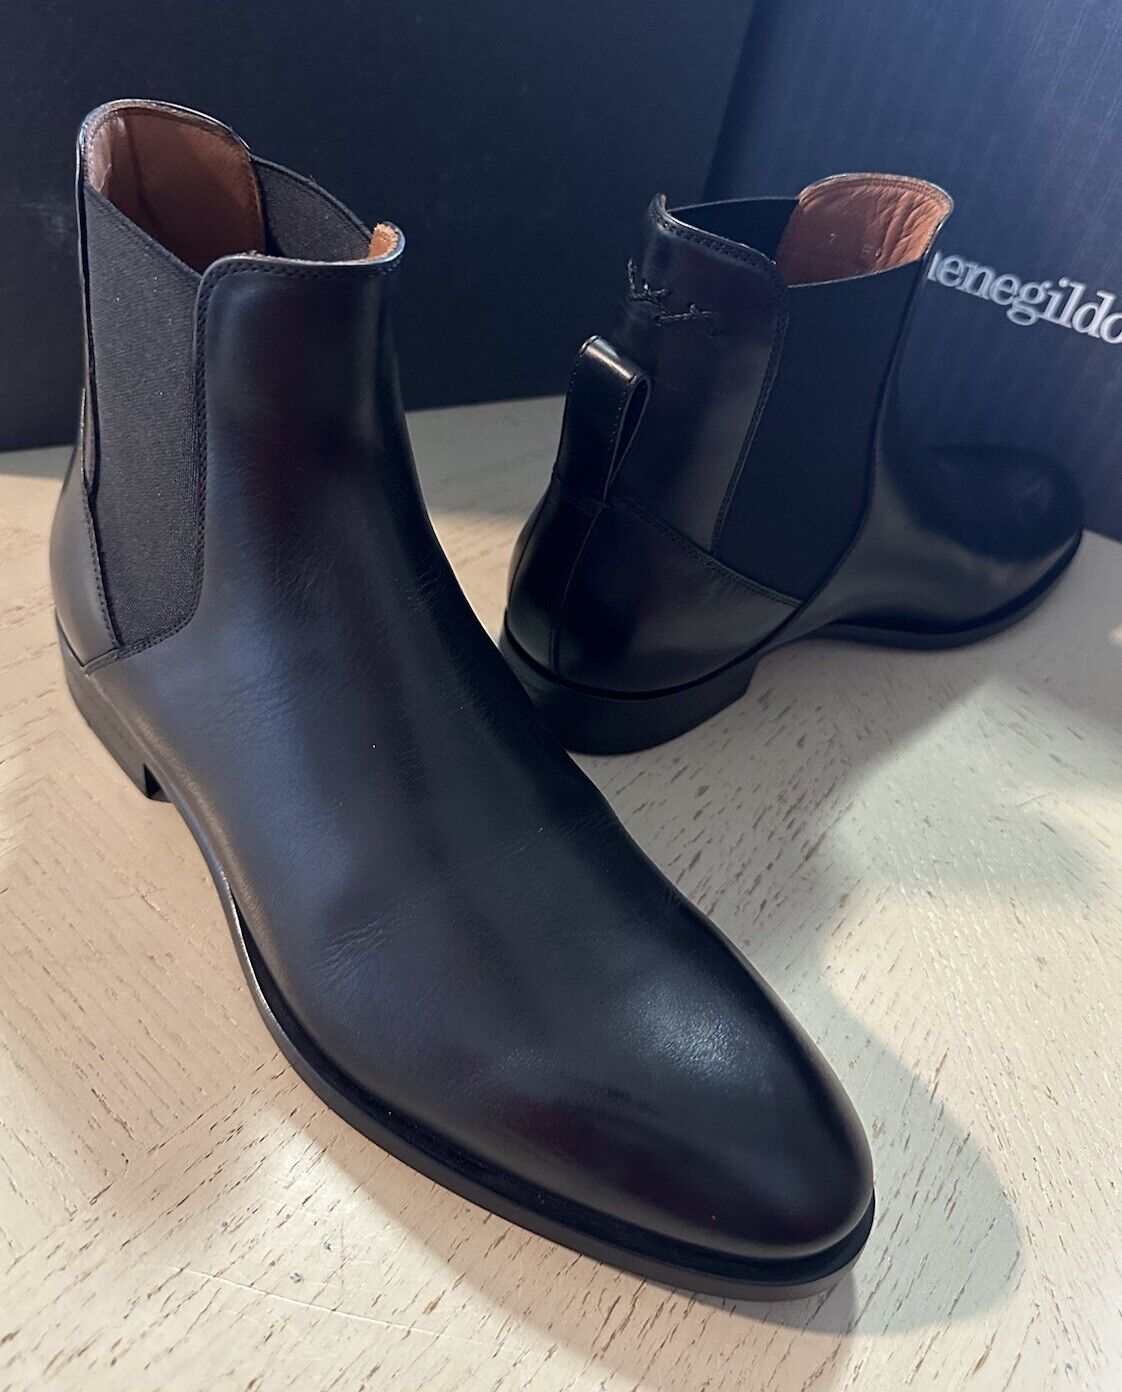 Ermenegildo Zegna Couture Calfskin Leather Boots Shoes Black 8 US/41 E Mew $1395